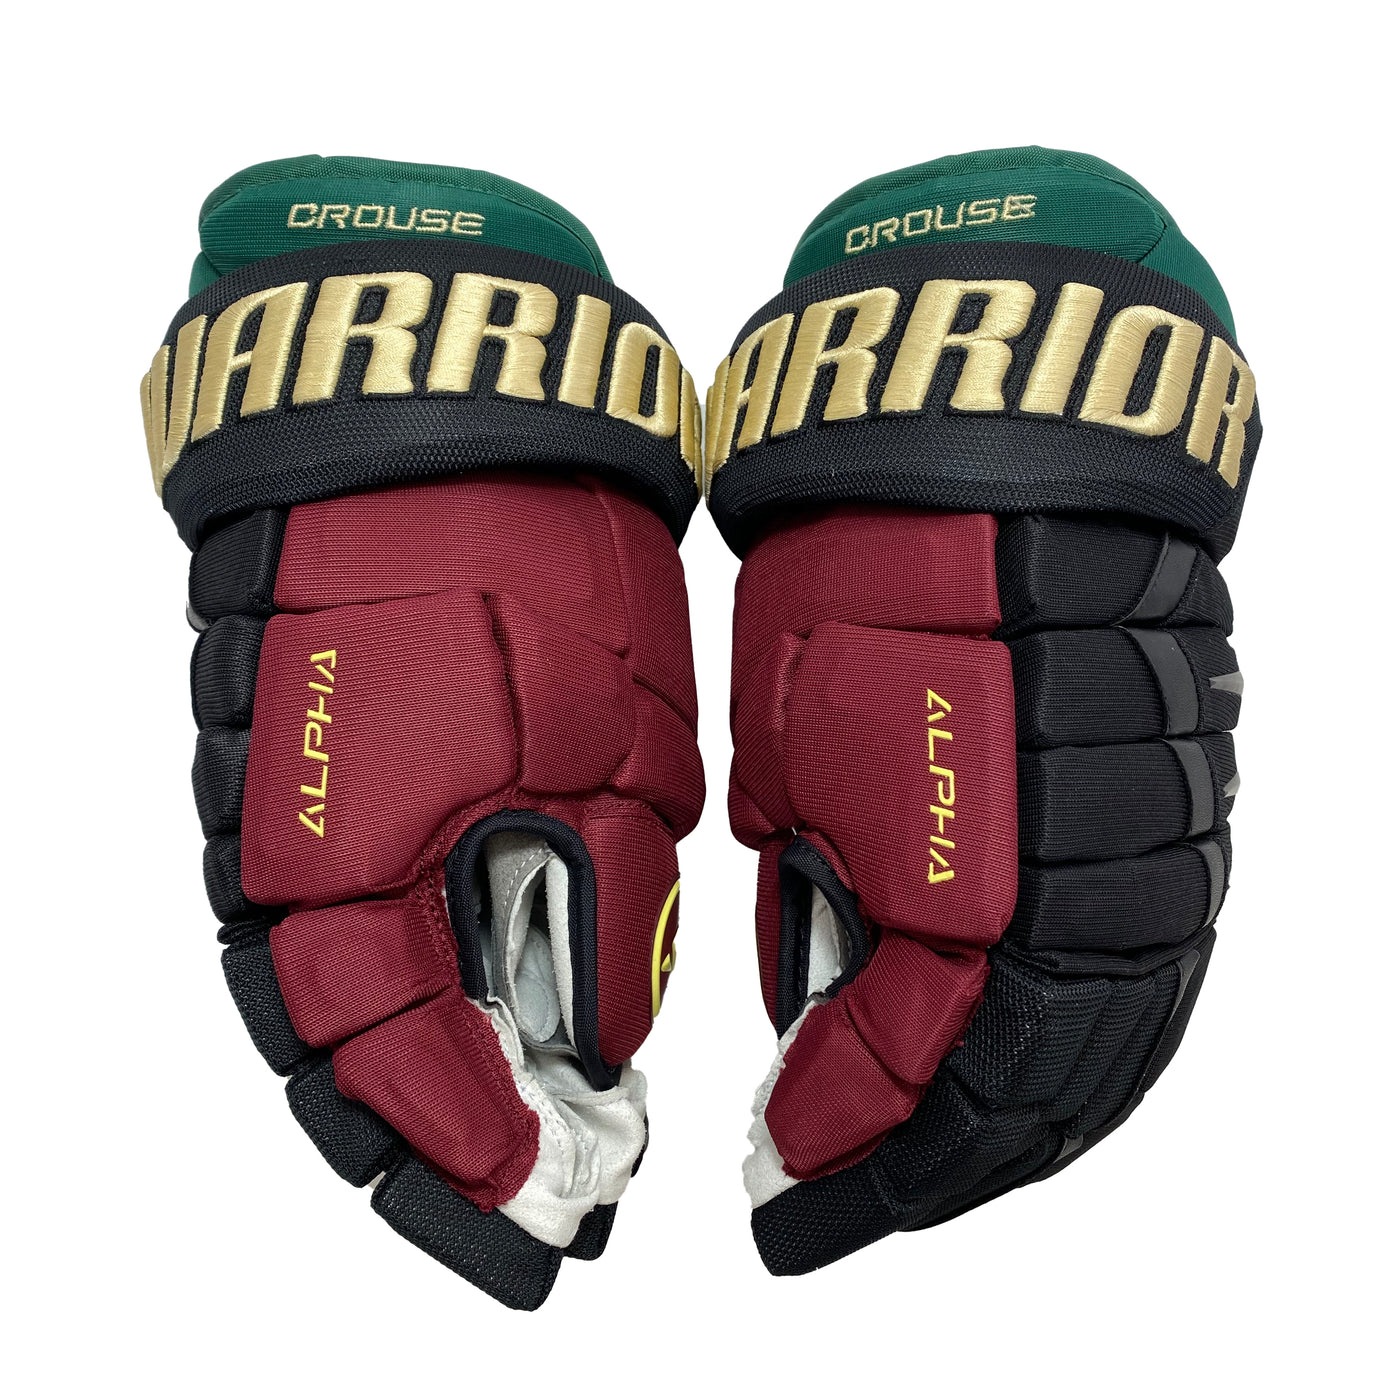 Warrior Alpha DX - Arizona Coyotes - Kachina Pro Stock Gloves - Lawson Crouse